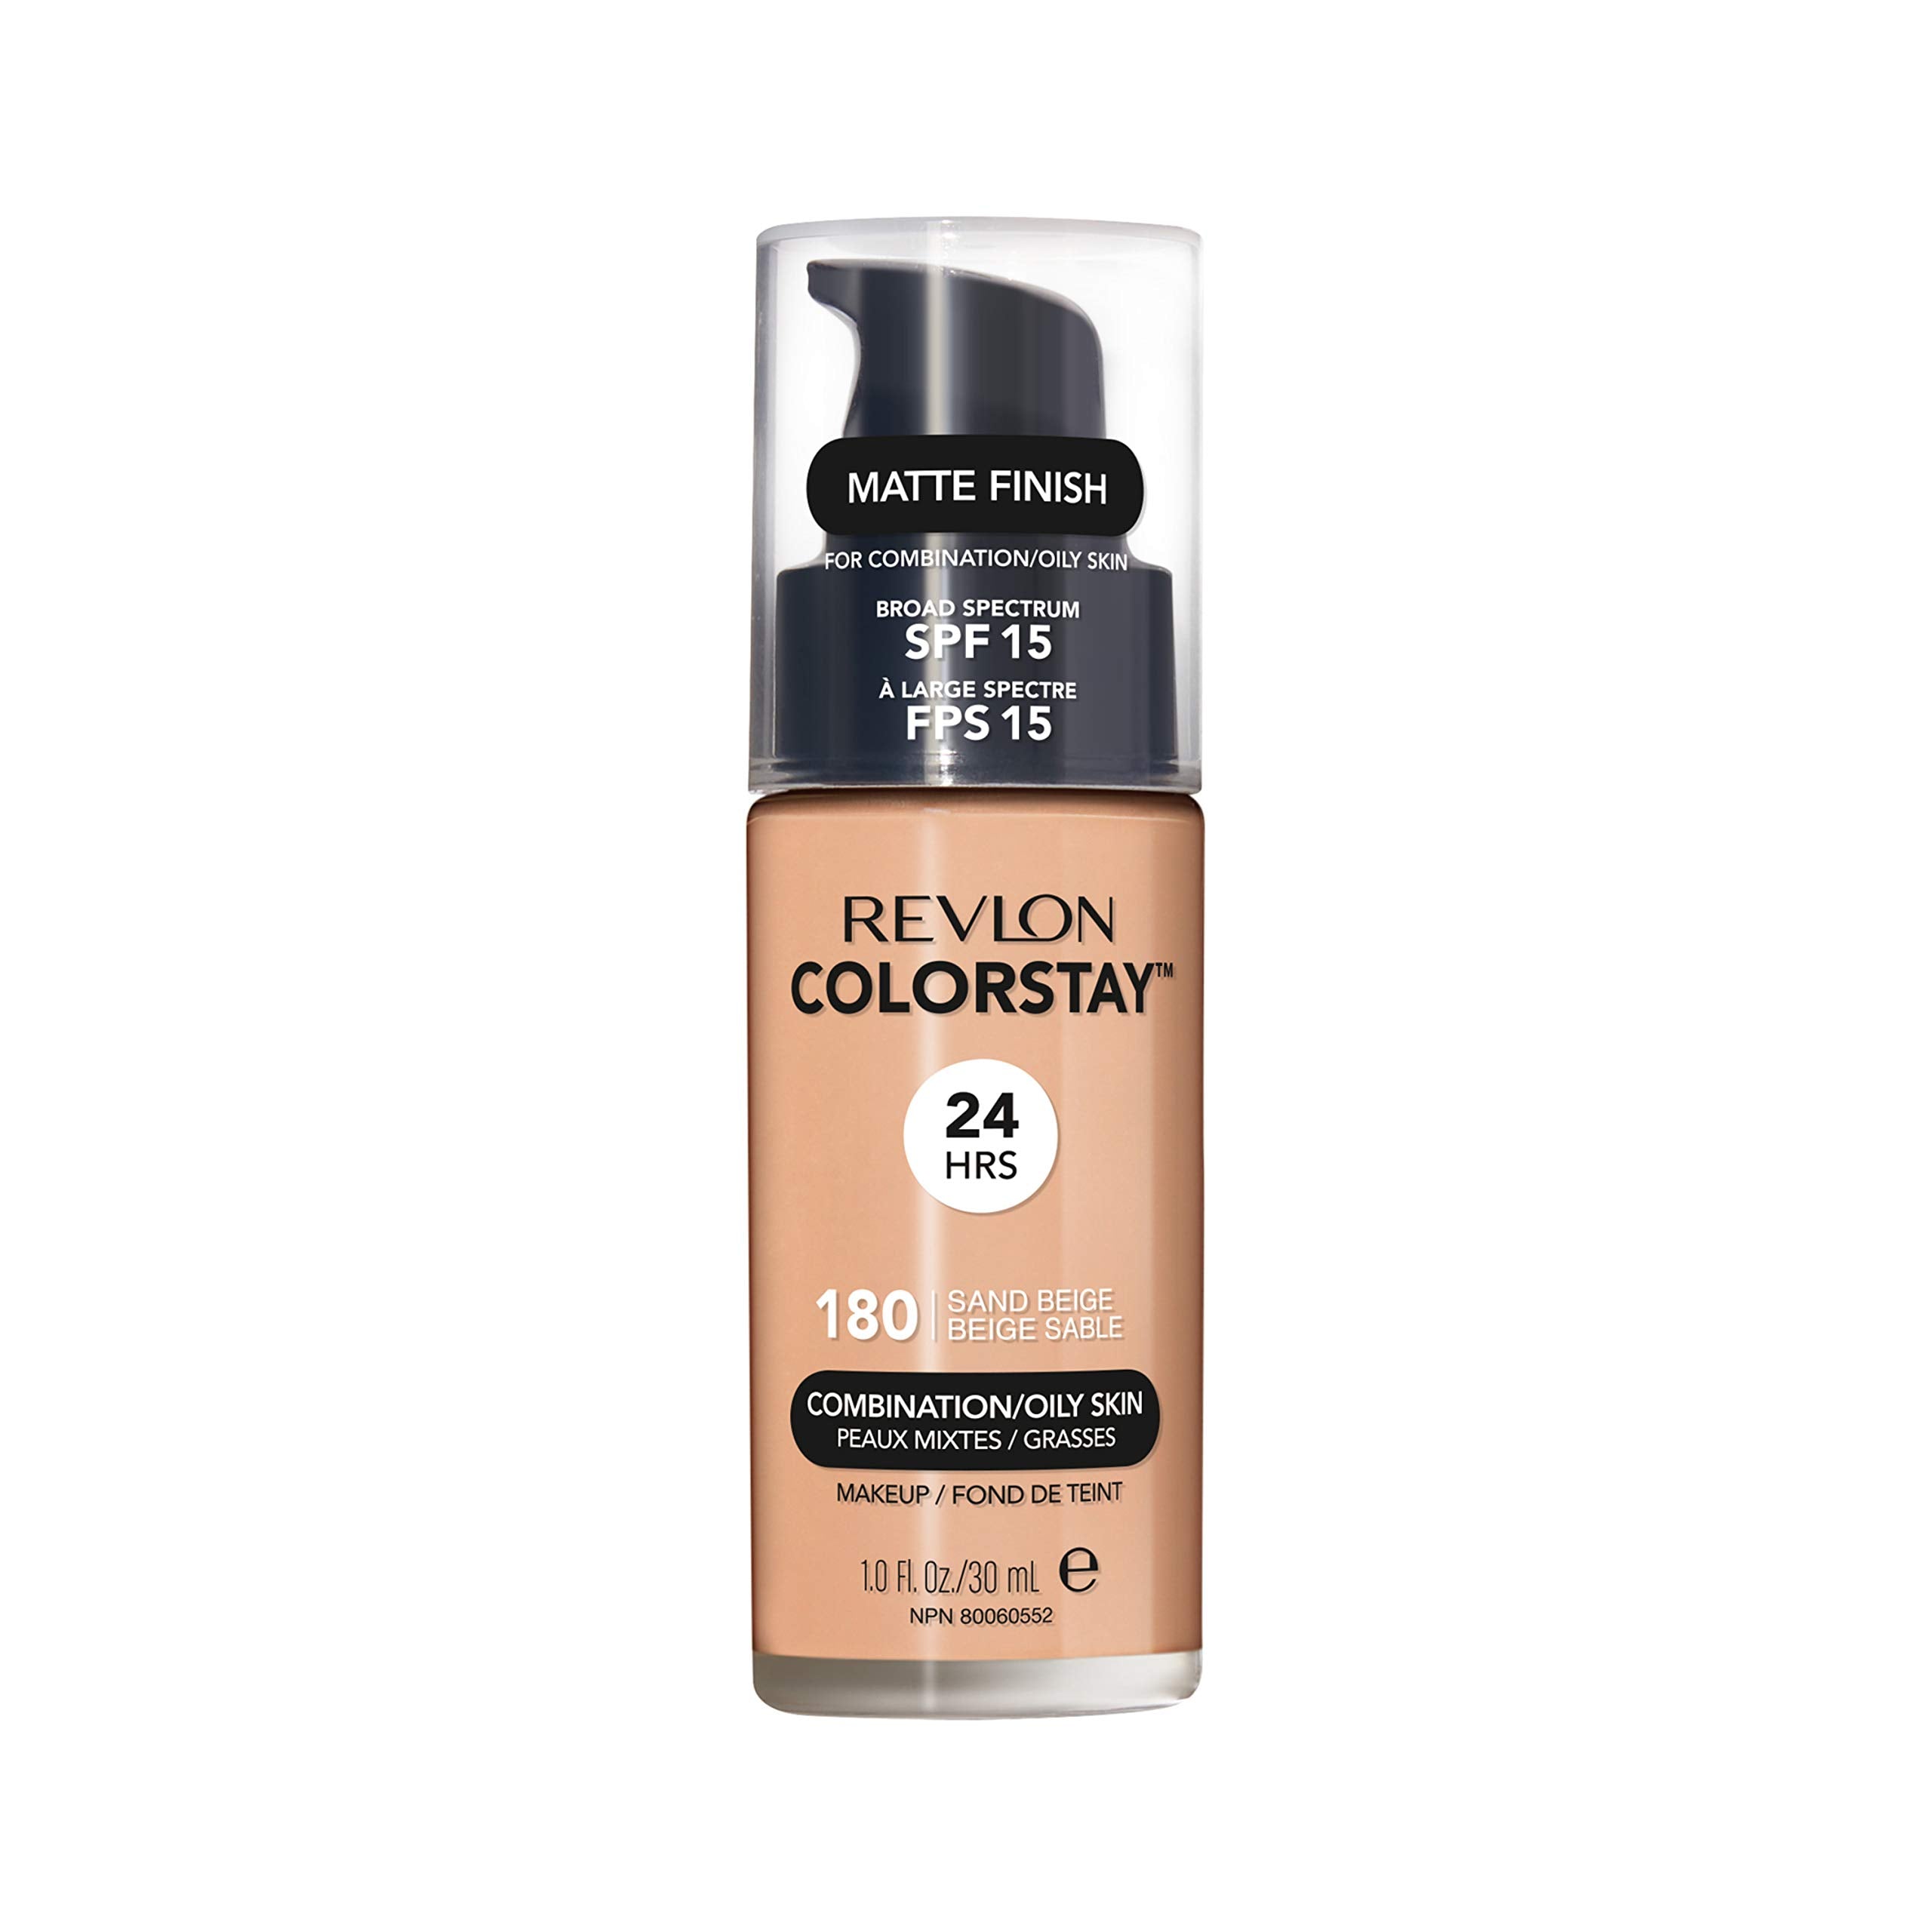 Revlon Colorstay Liquid Foundation Makeup for Combination/Oily Skin SPF 15, Longwear Medium-Full Coverage with Matte Finish, Sand Beige (180), 30 ml